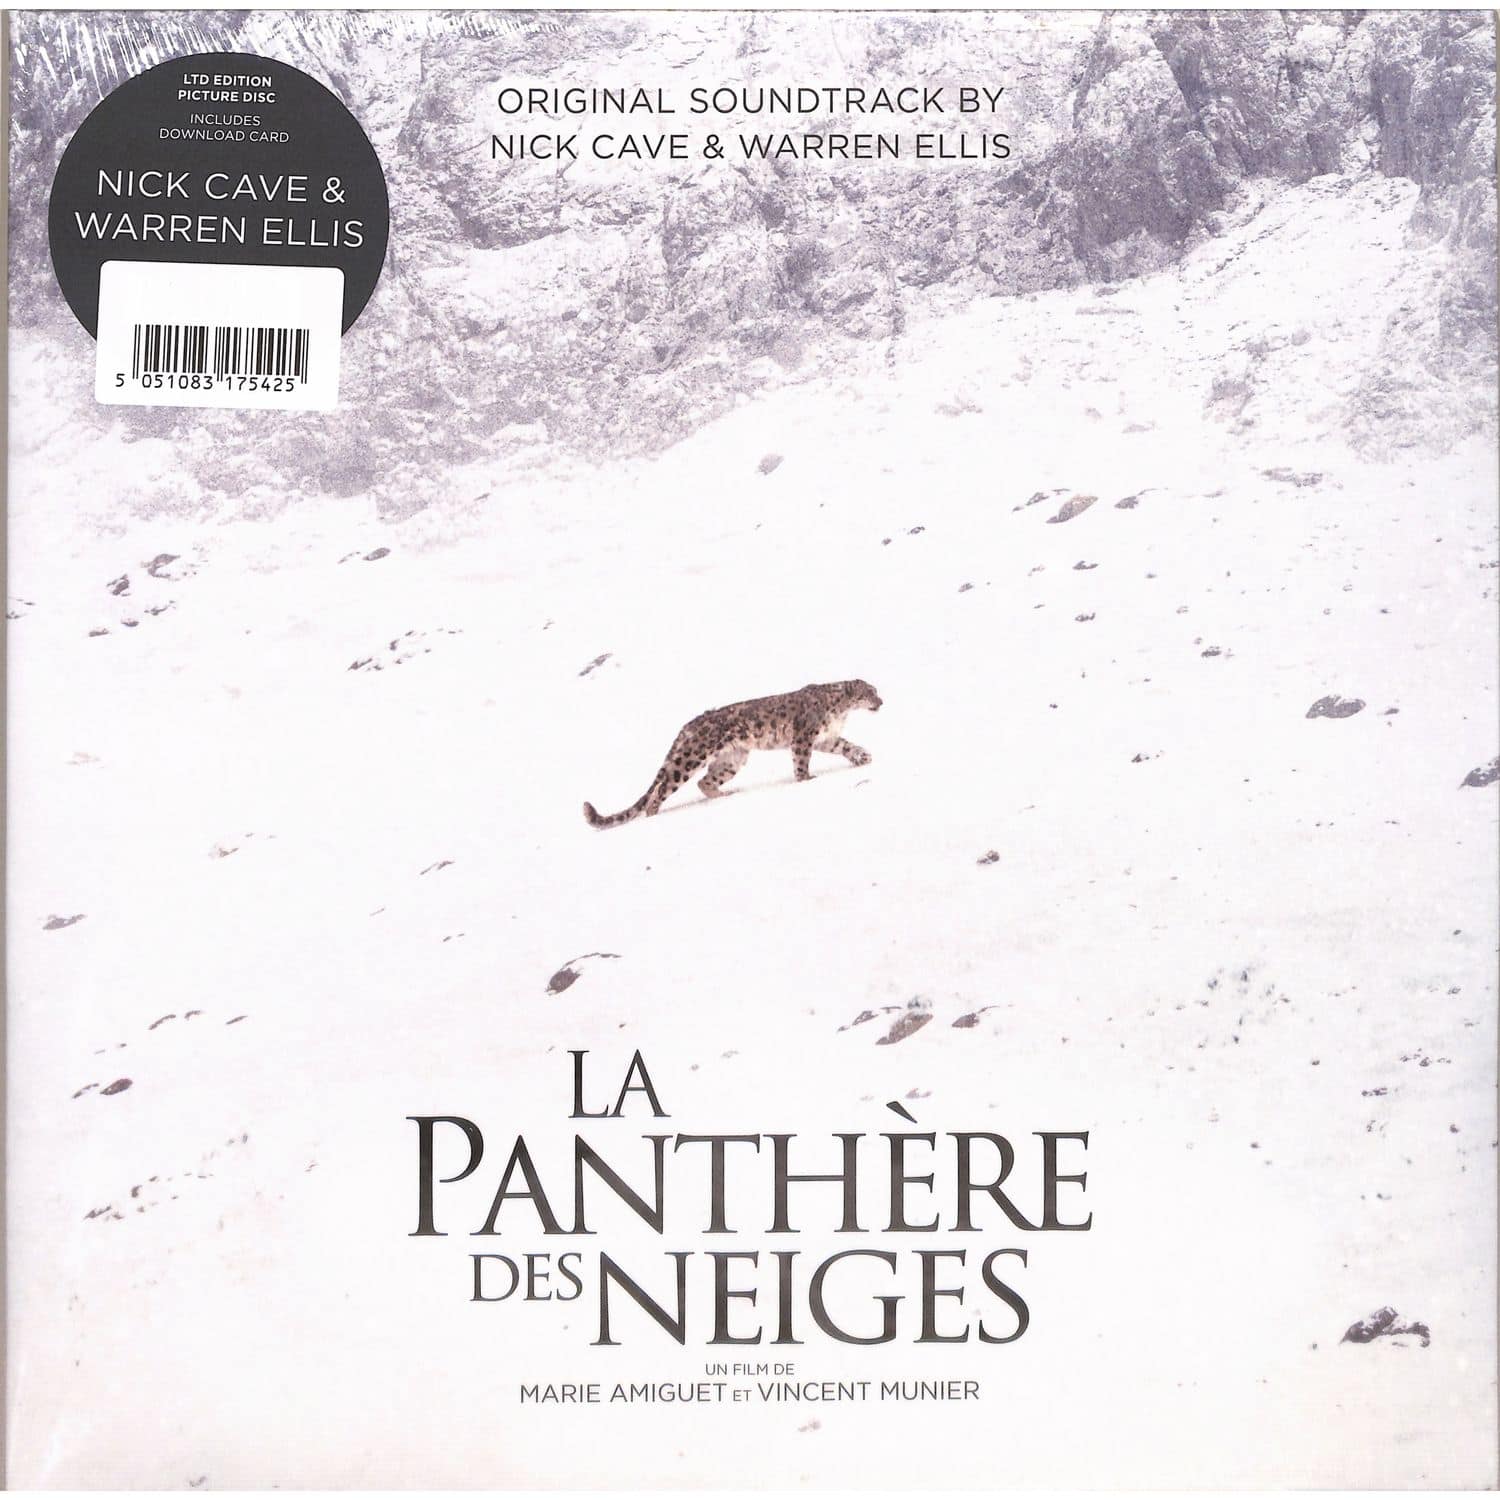 Nick Cave & Warren Ellis - LA PANTHARE DES NEIGES 